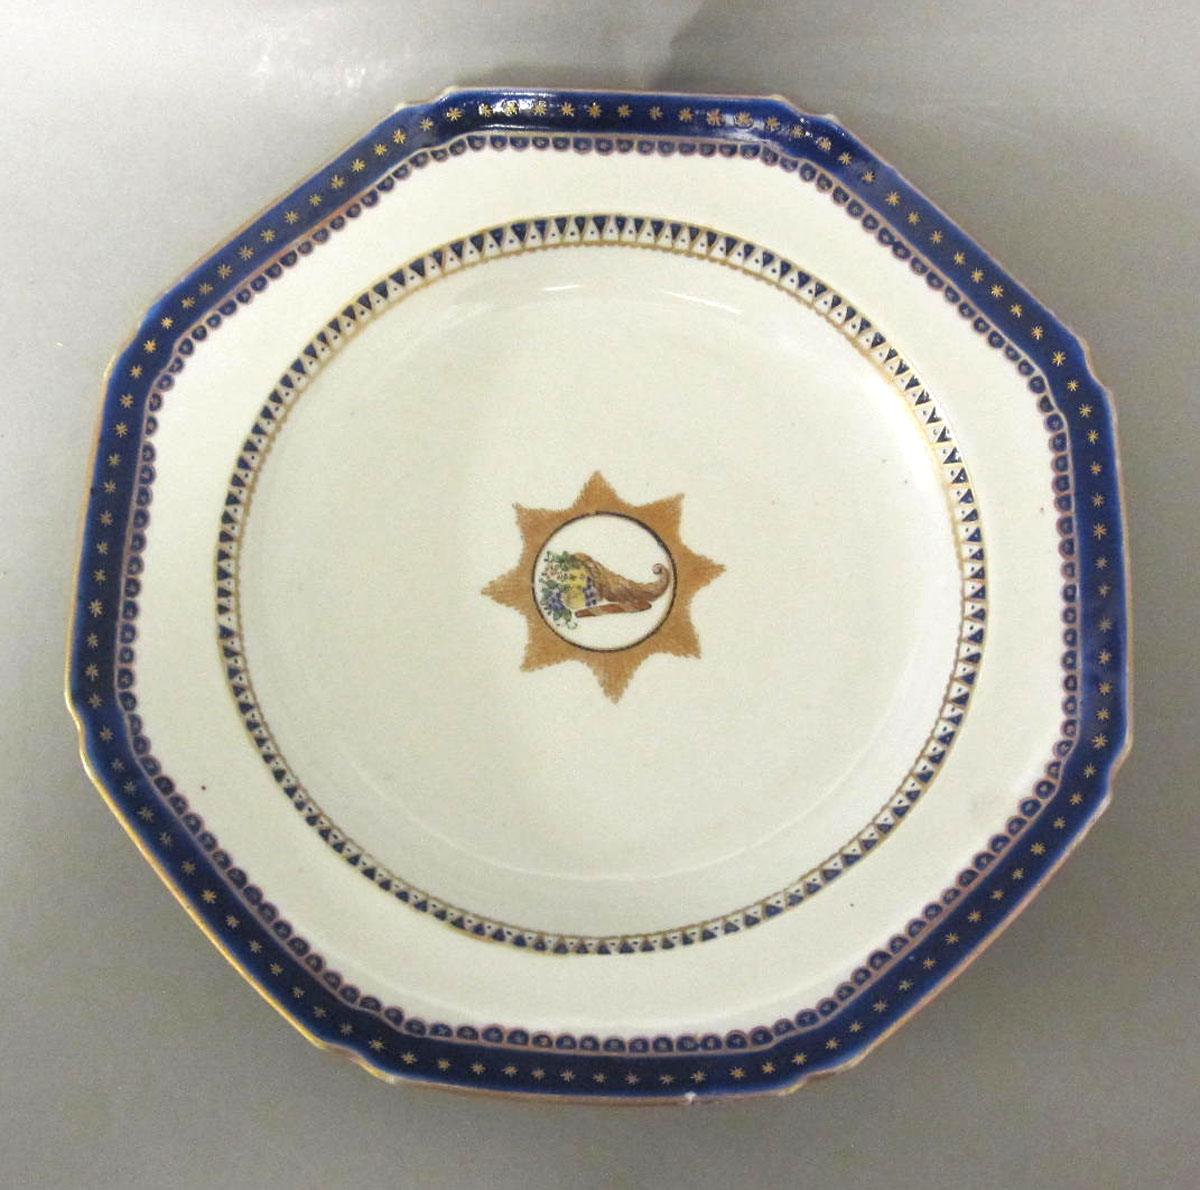 1965.0718.008 Porcelain plate